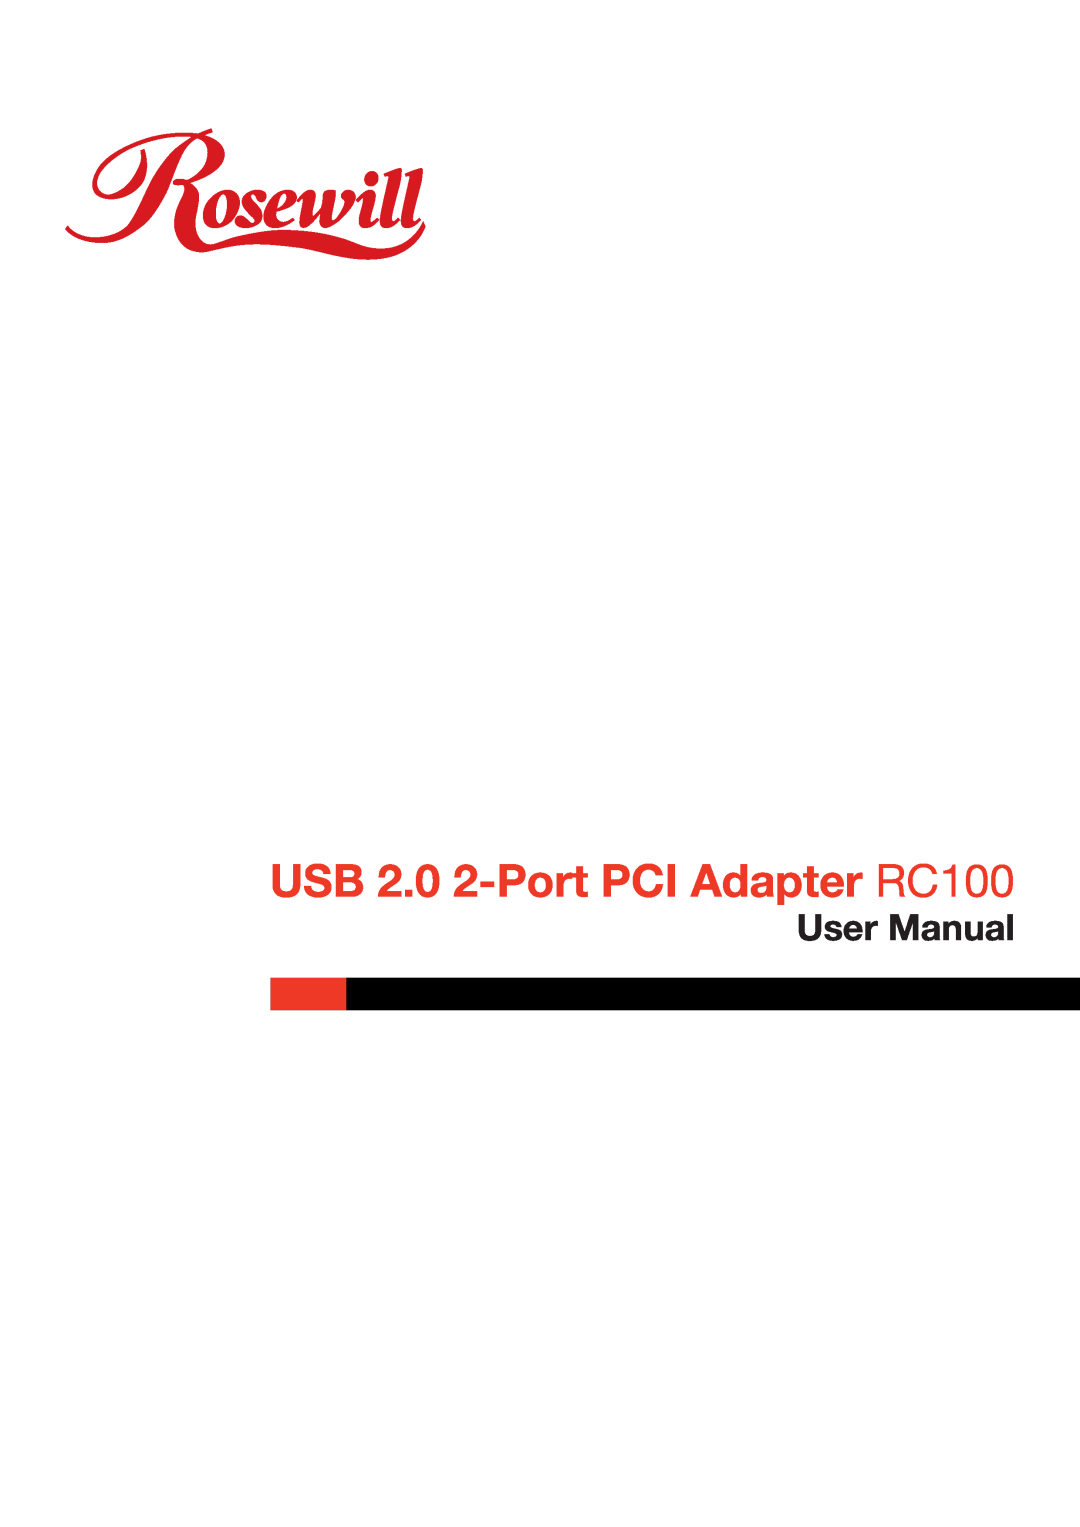 Rosewill RC-100 user manual USB 2.0 2-Port PCI Adapter RC100, User Manual 